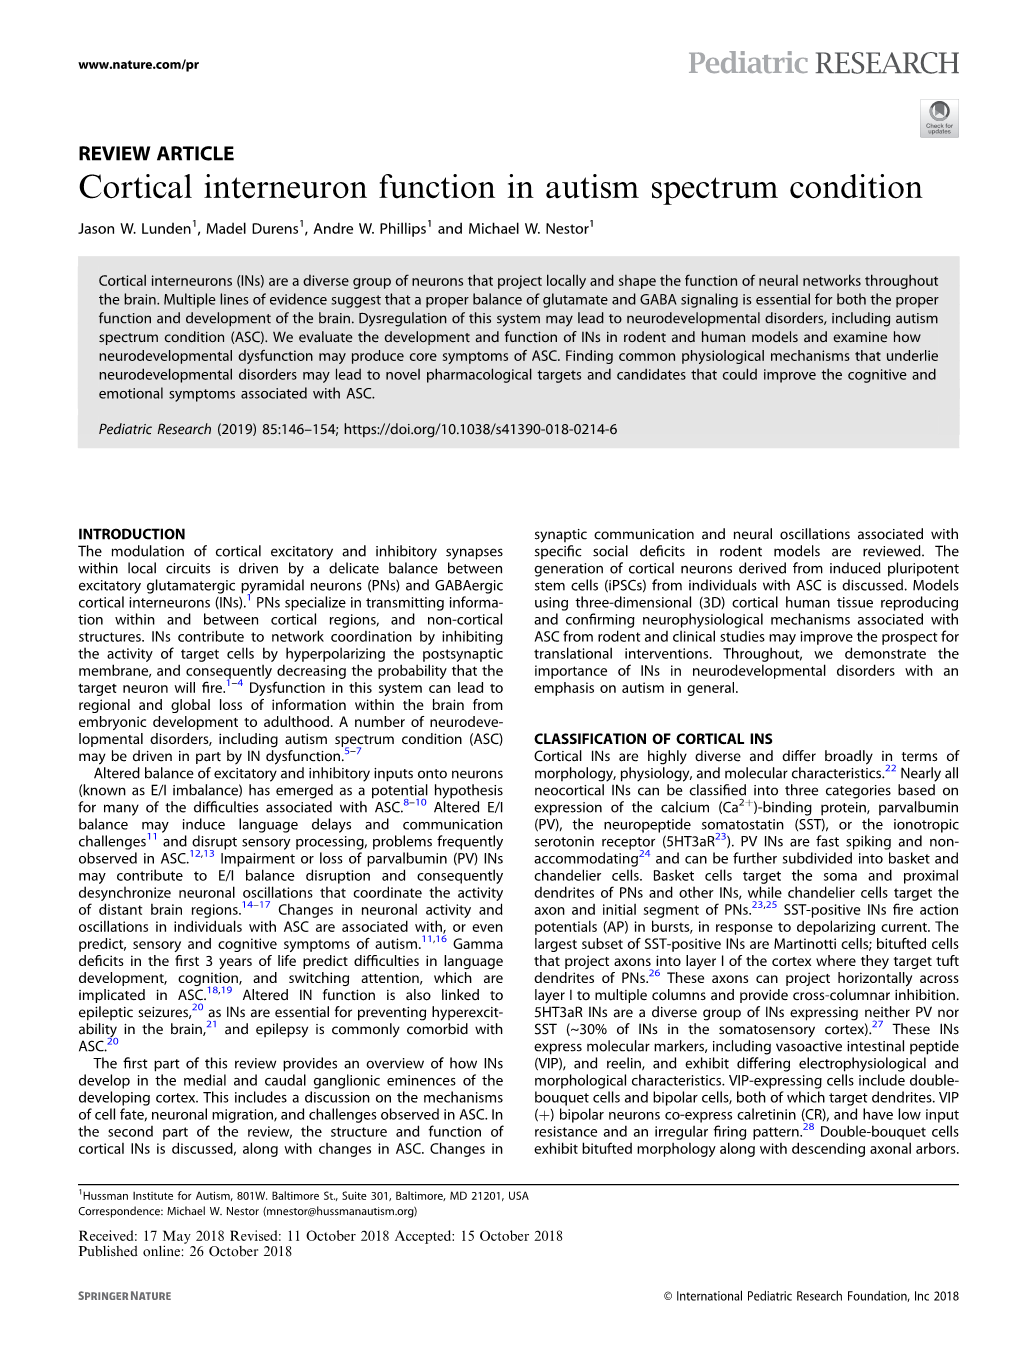 Cortical Interneuron Function in Autism Spectrum Condition